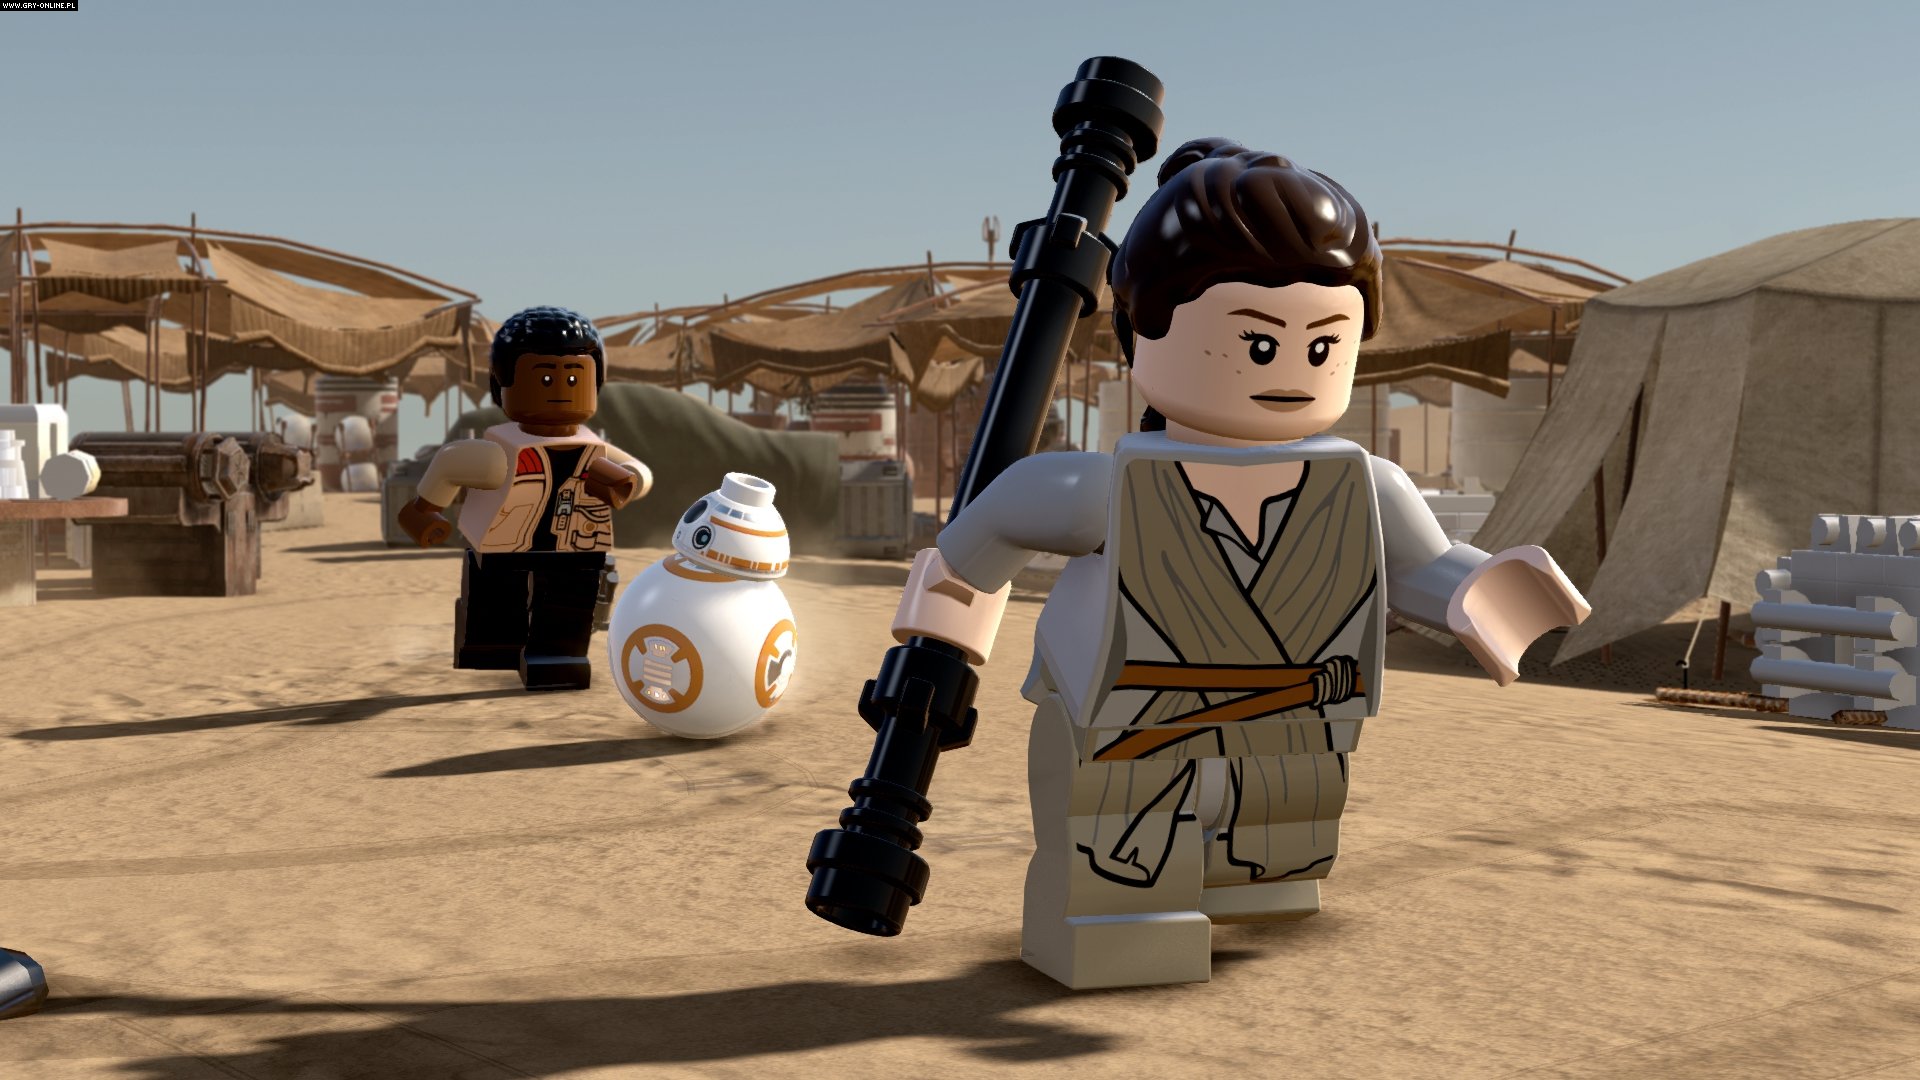 LEGO Star Wars The Force Awakens mac free